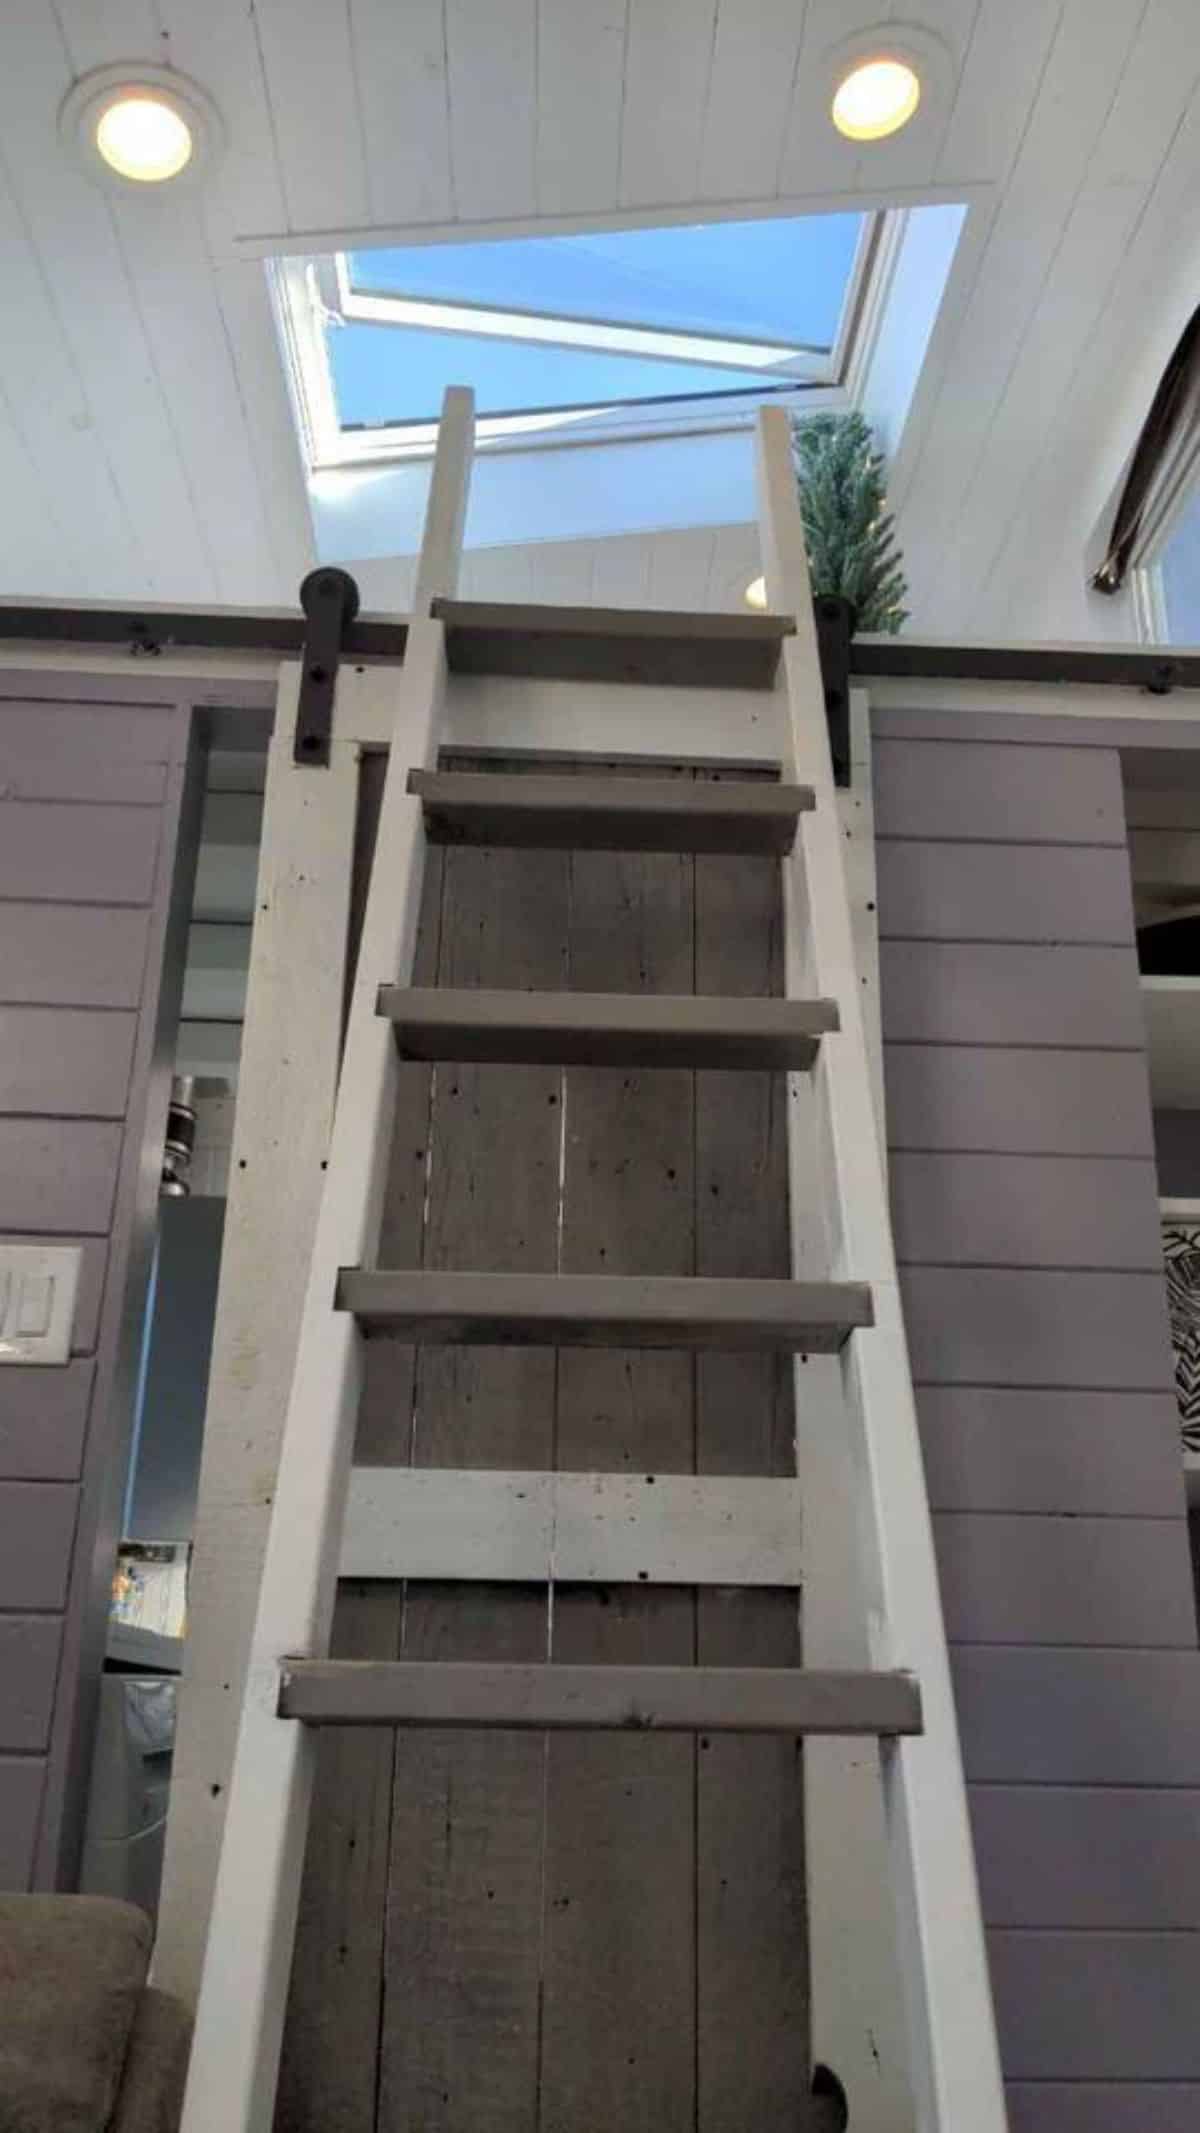 Ladder for loft 2 of 2 bedroom tiny house